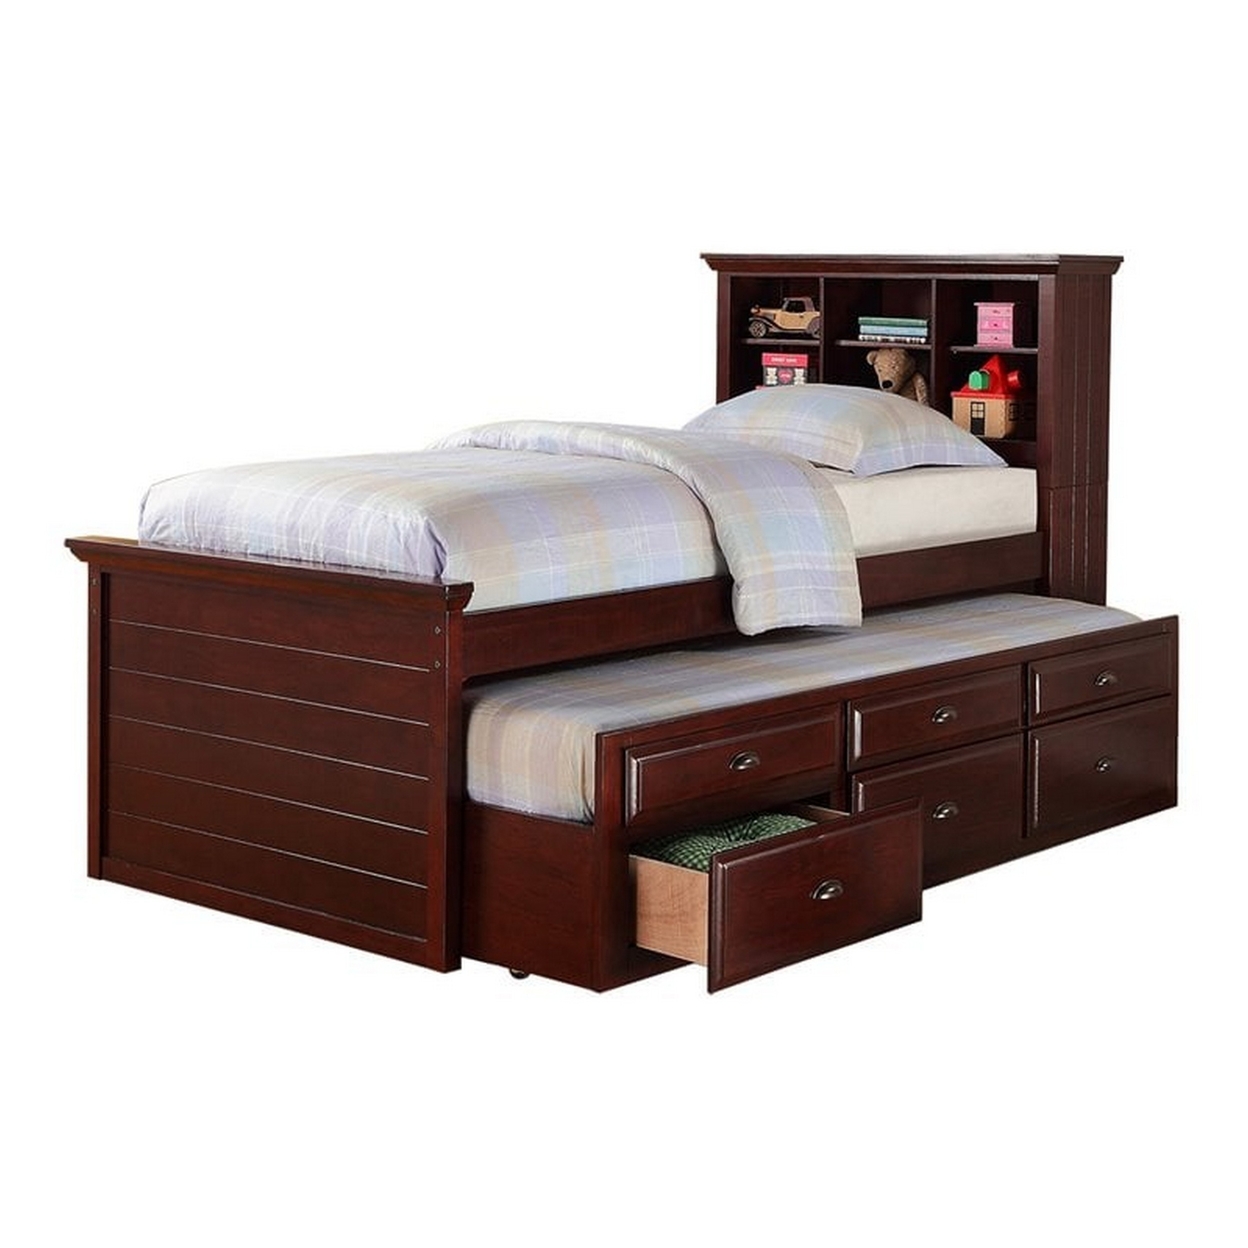 Toni Twin Size Trundle Bed With 6 Drawers, Bookcase Headboard, Brown Wood- Saltoro Sherpi